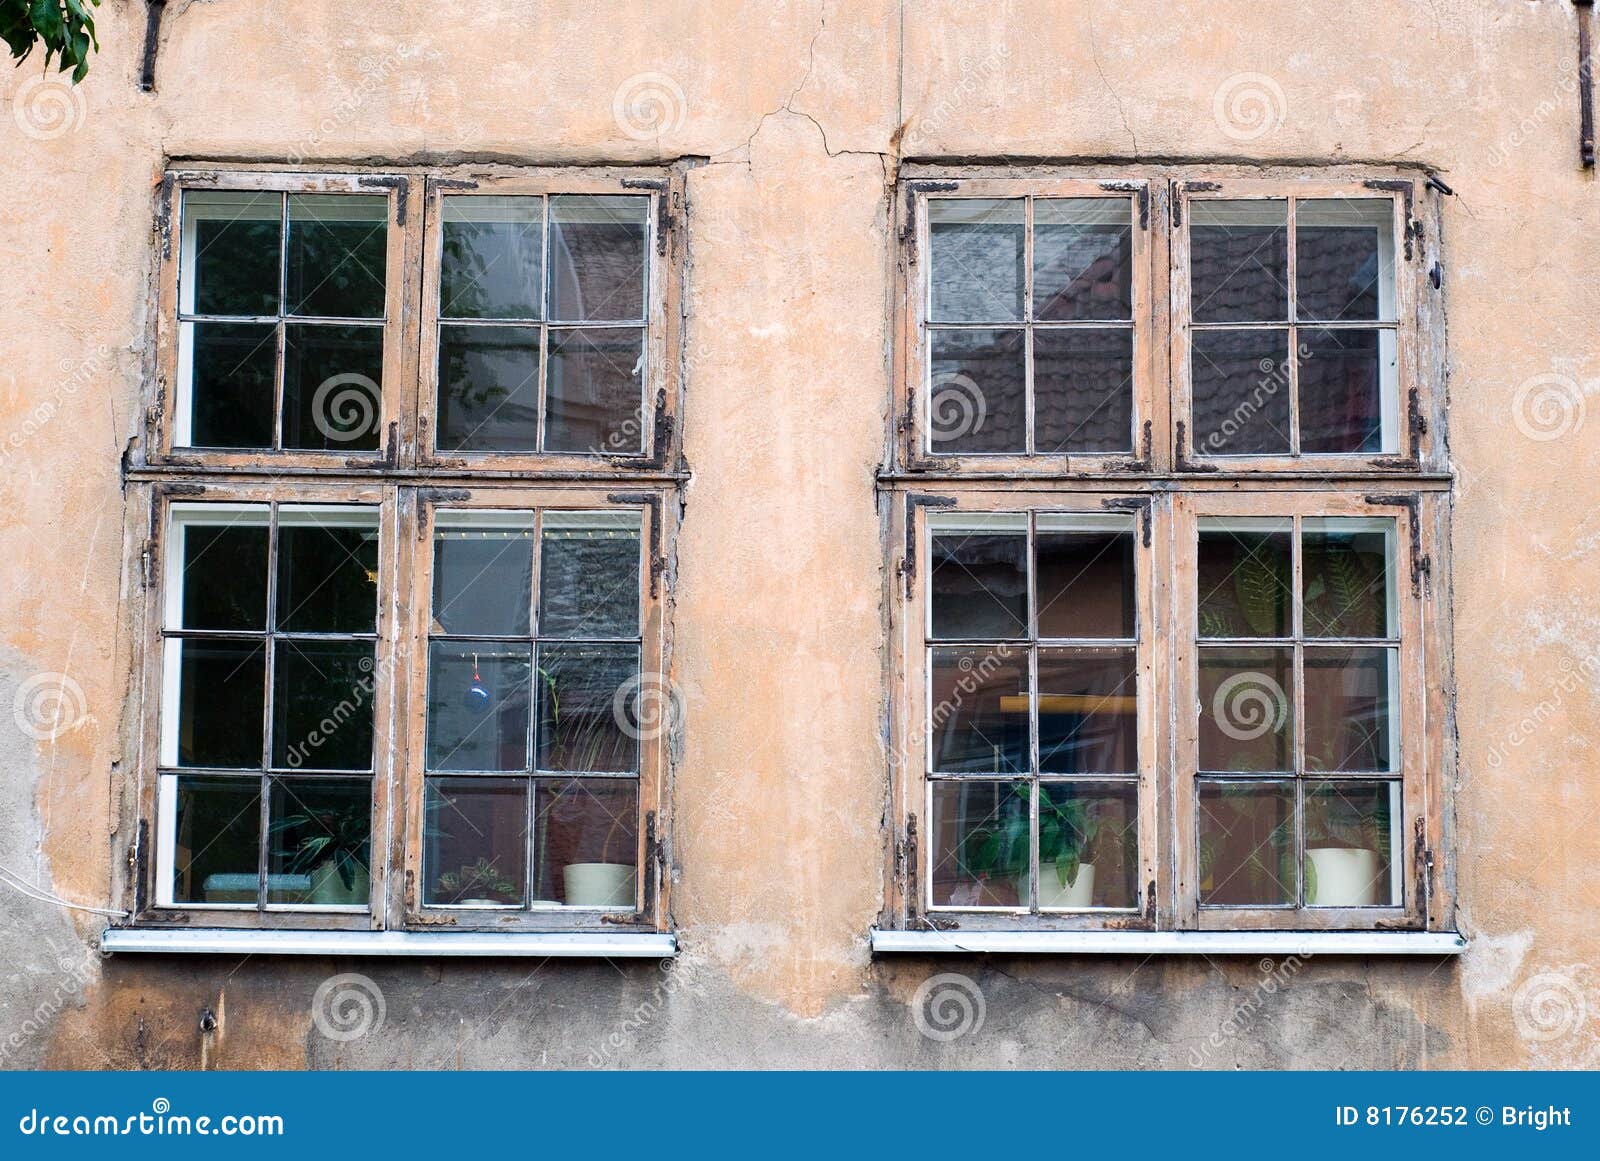 old windows